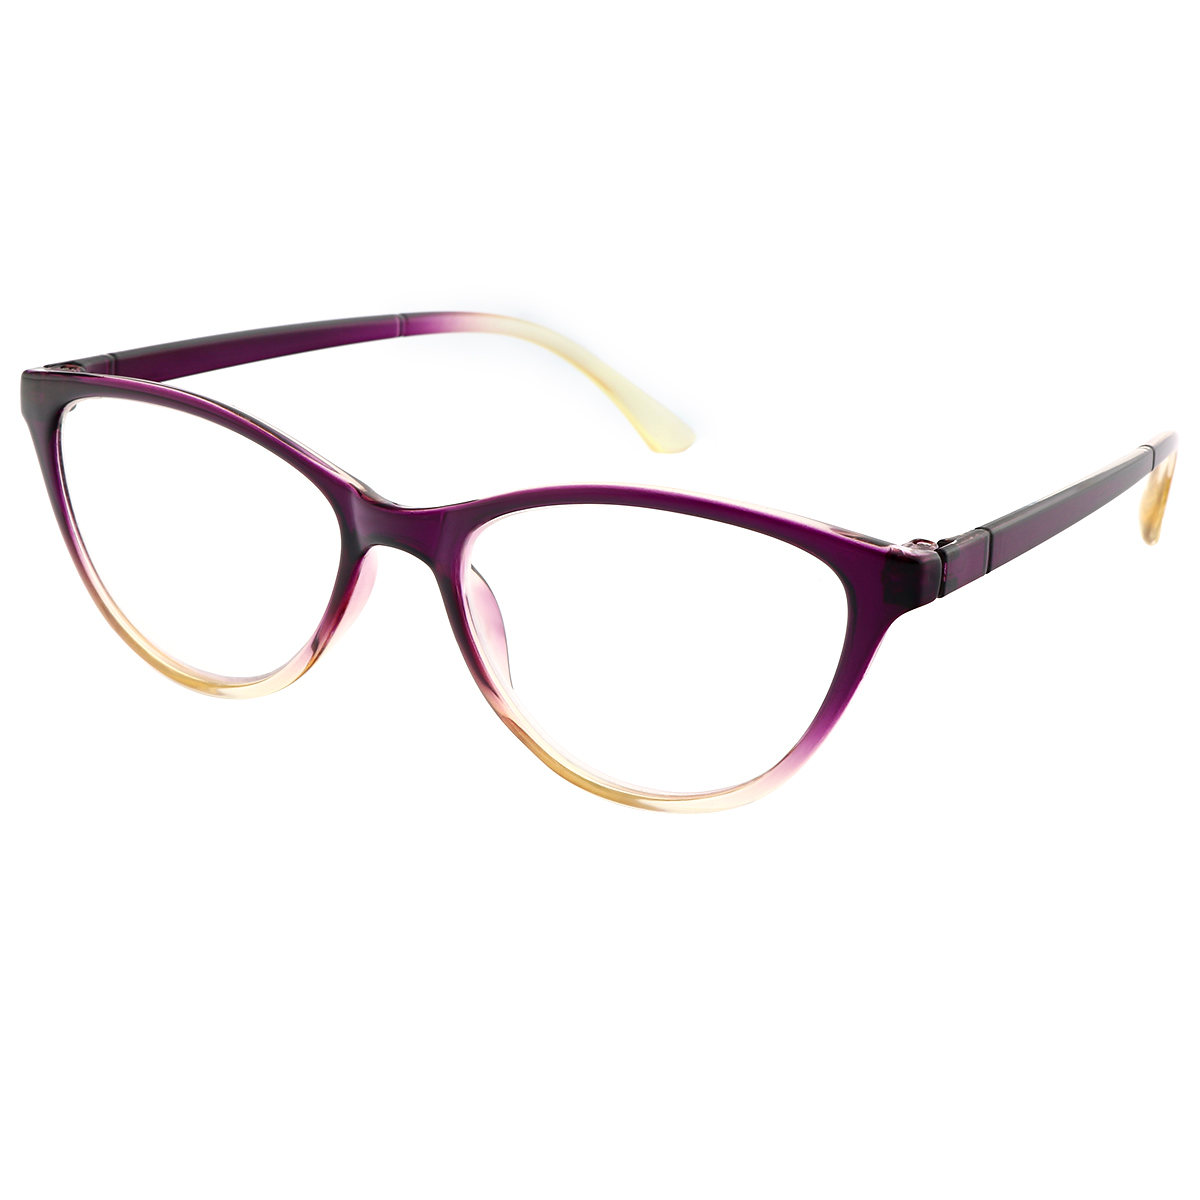 Hispania - Square Purple Reading Glasses for Women